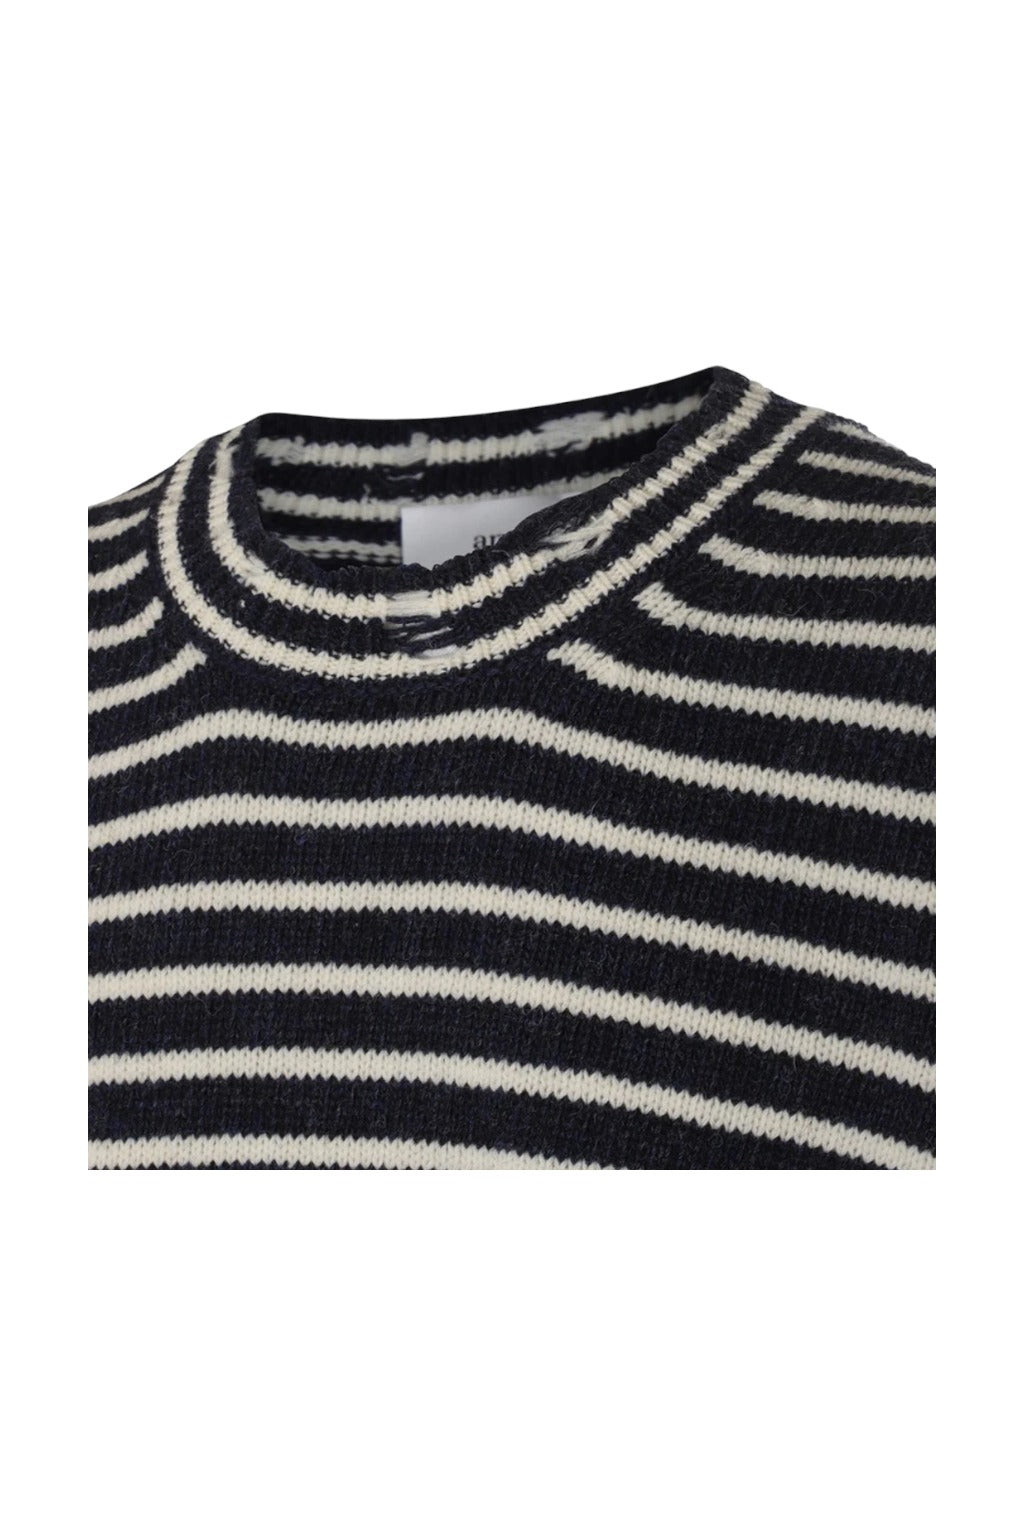 Ami Paris Striped Distressed Virgin Wool Sweater